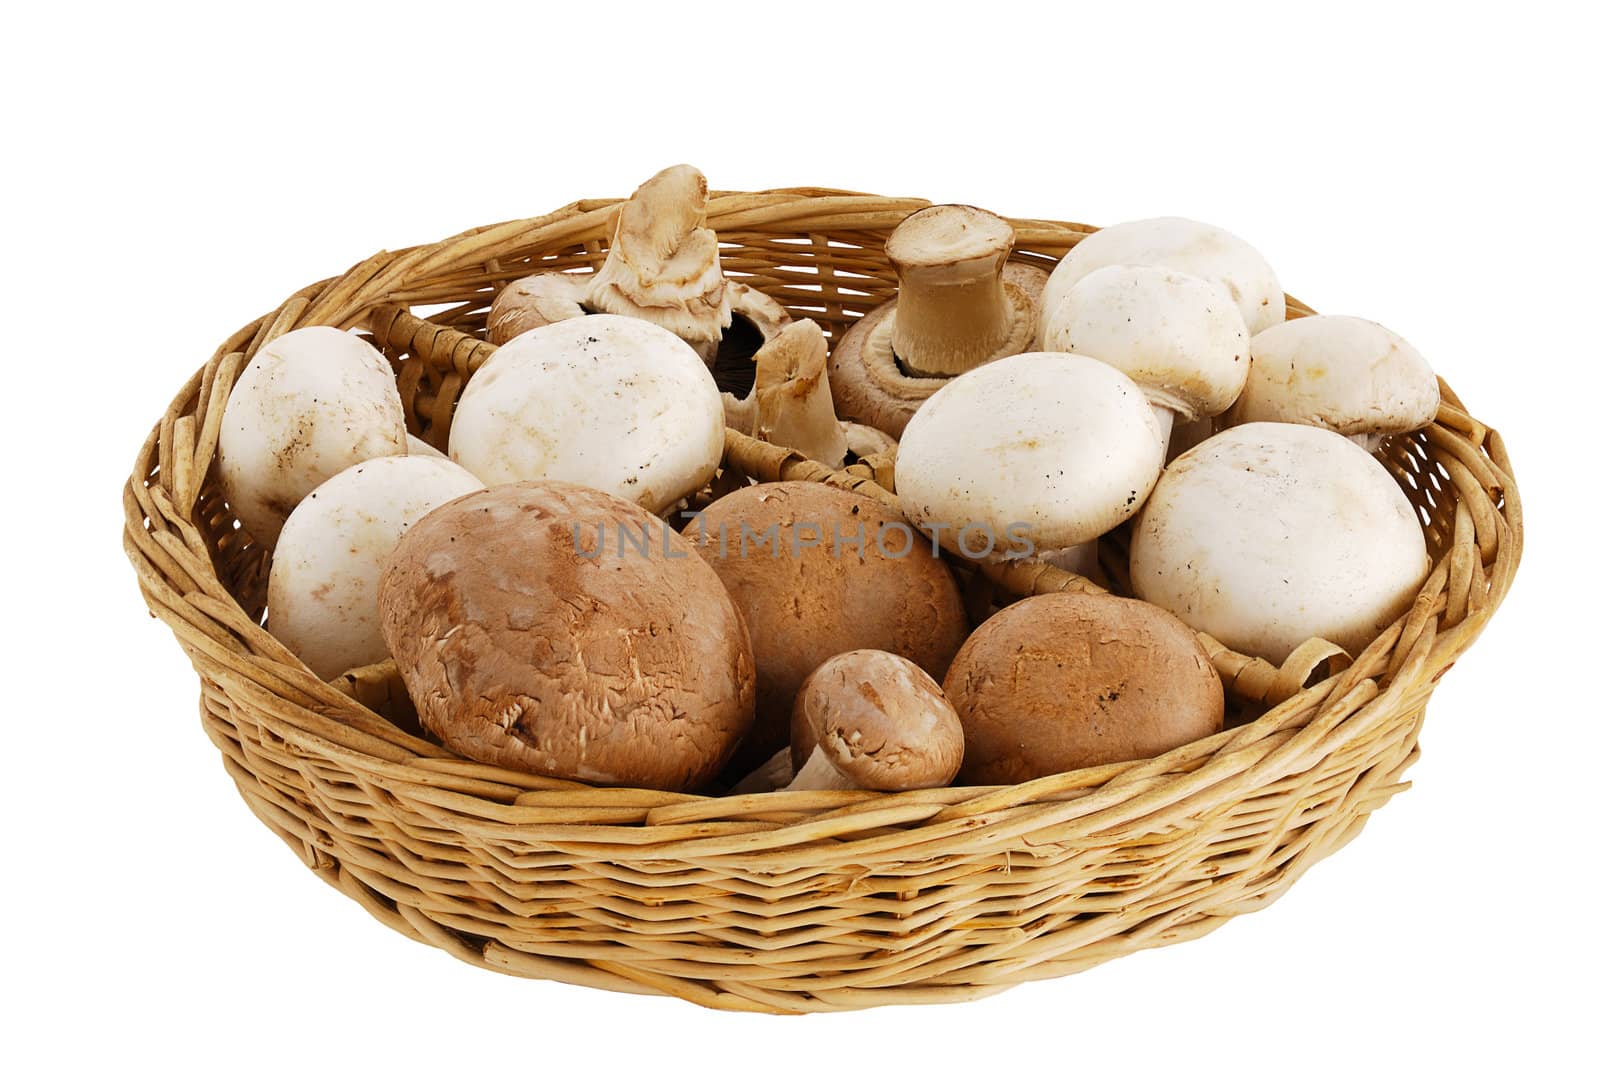 Champignon and portobello mushroom mix in straw basket isolated on white background